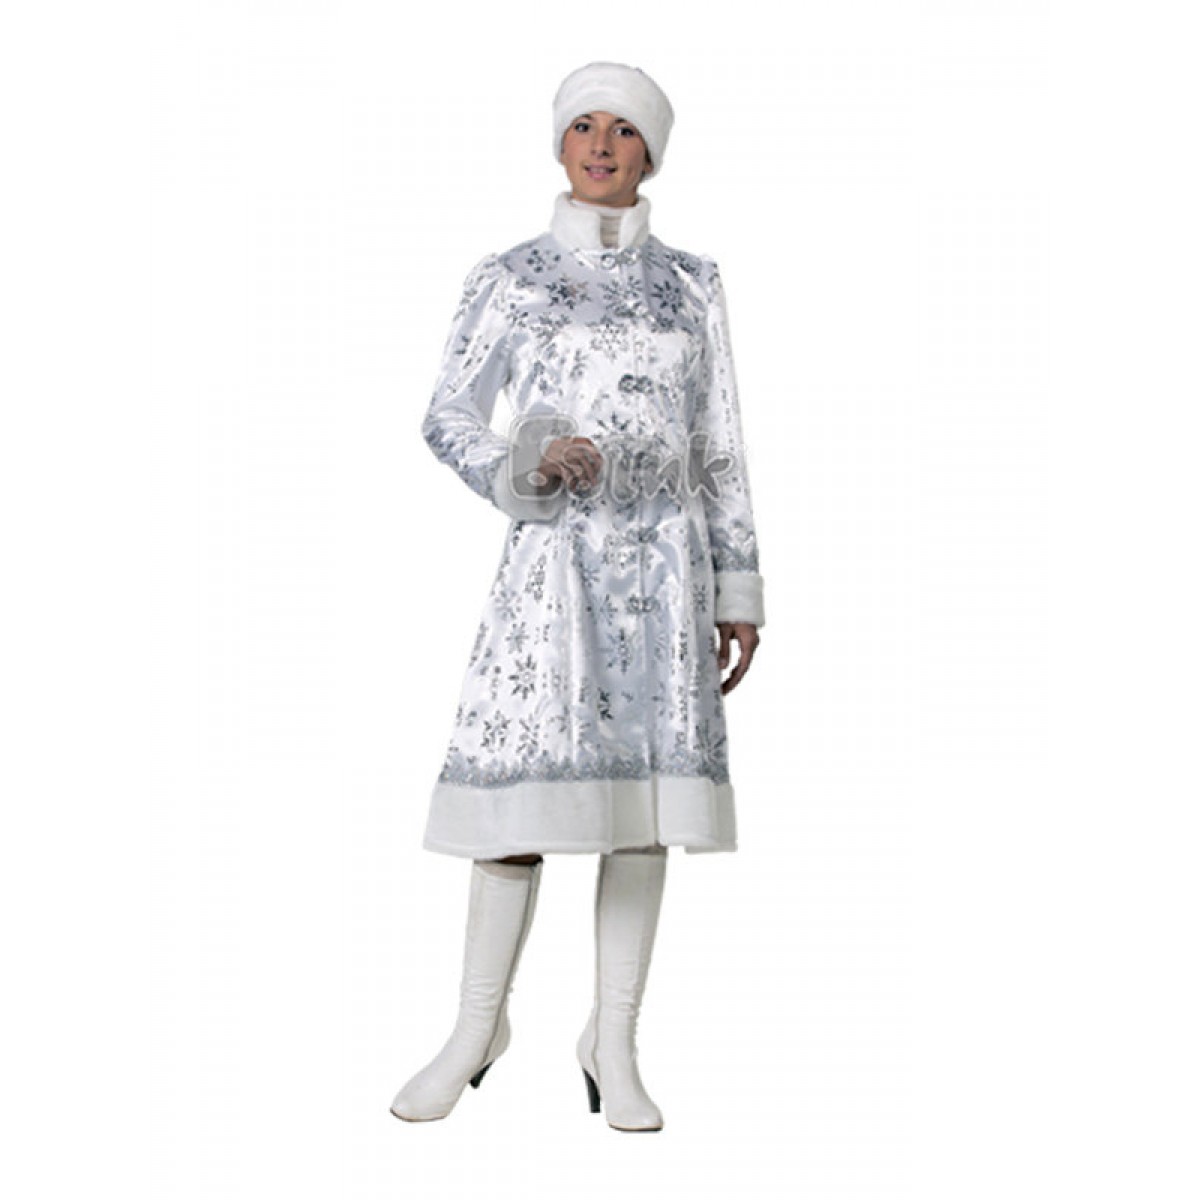 Новогодний костюм Снегурочки для взрослых, белый костюм Снегурочки с серебряными снежинками, Батик